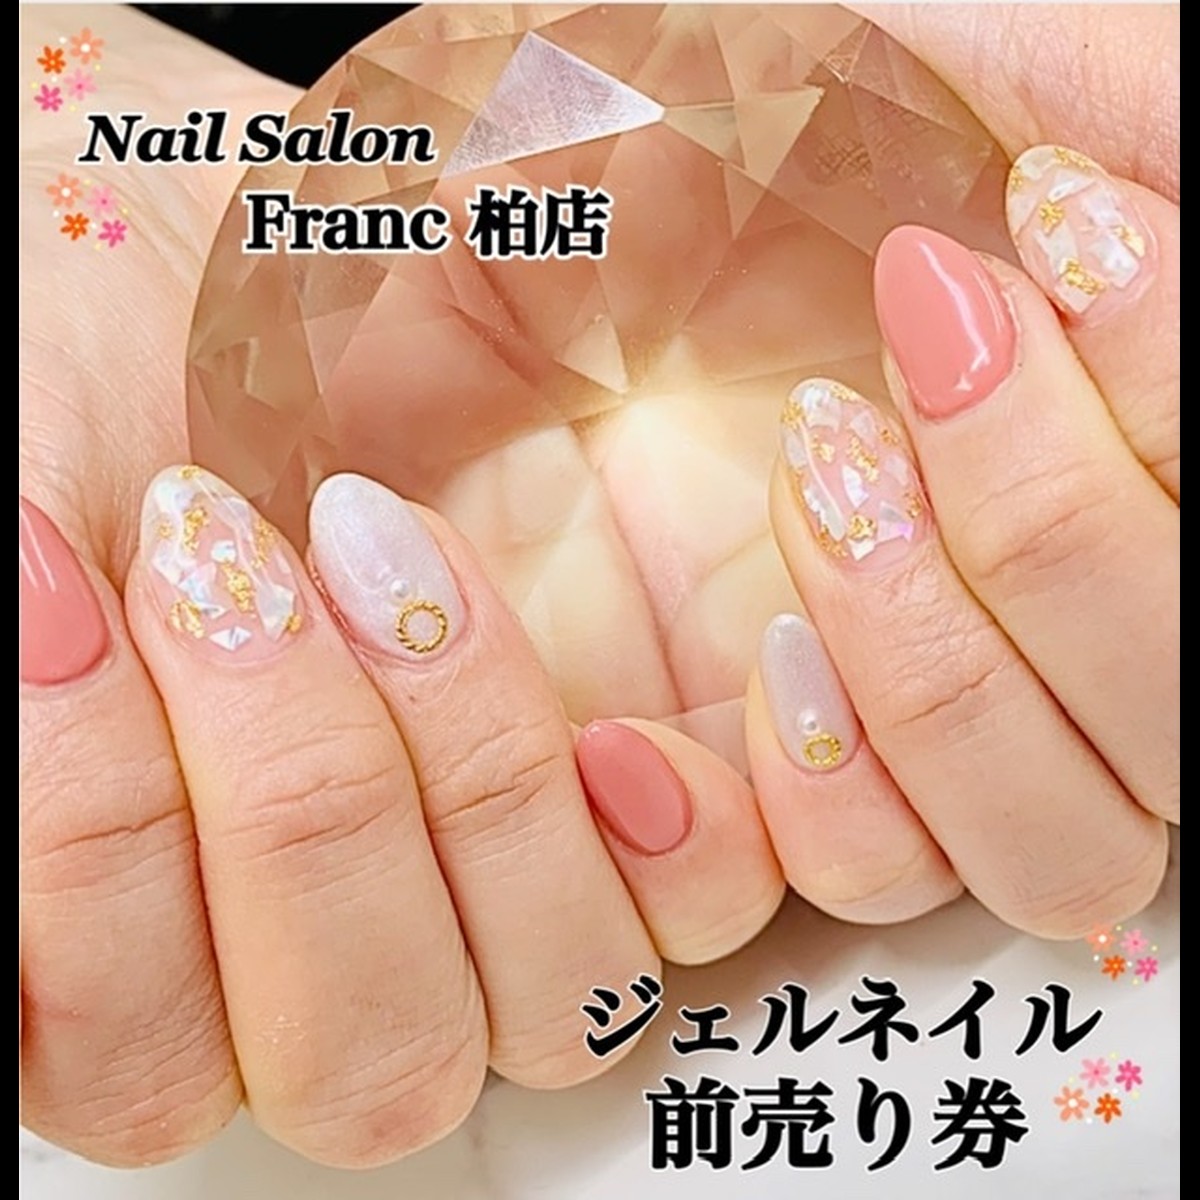 About Nail Salon Franc ネイルサロン フラン